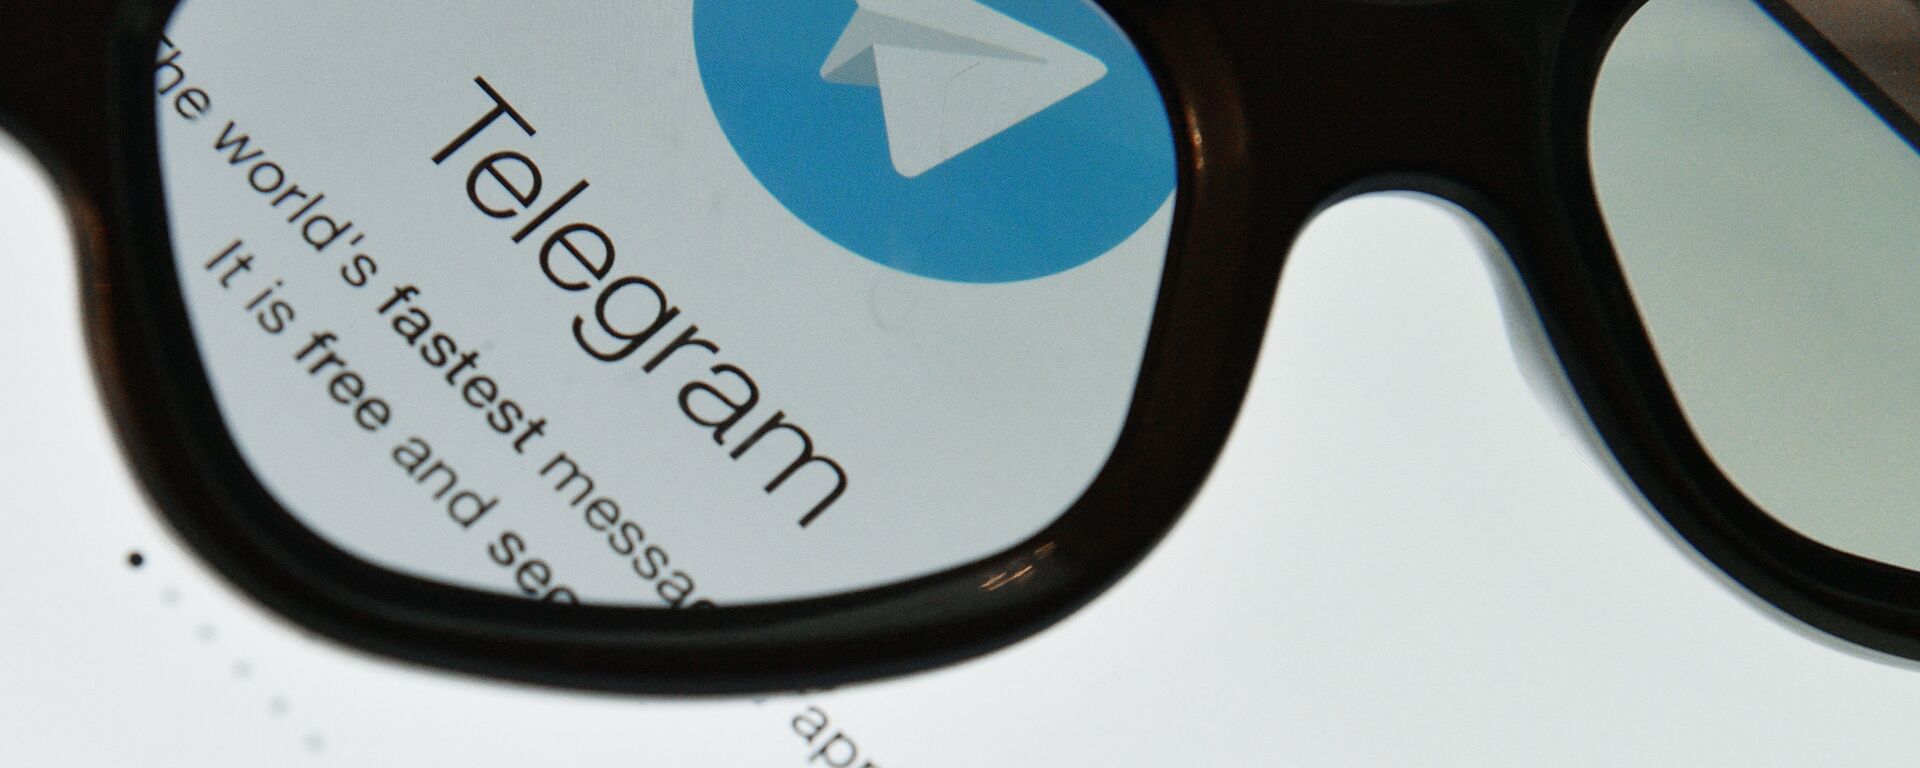 Логотип мессенджера Telegram на экране планшета. - Sputnik Узбекистан, 1920, 13.05.2021